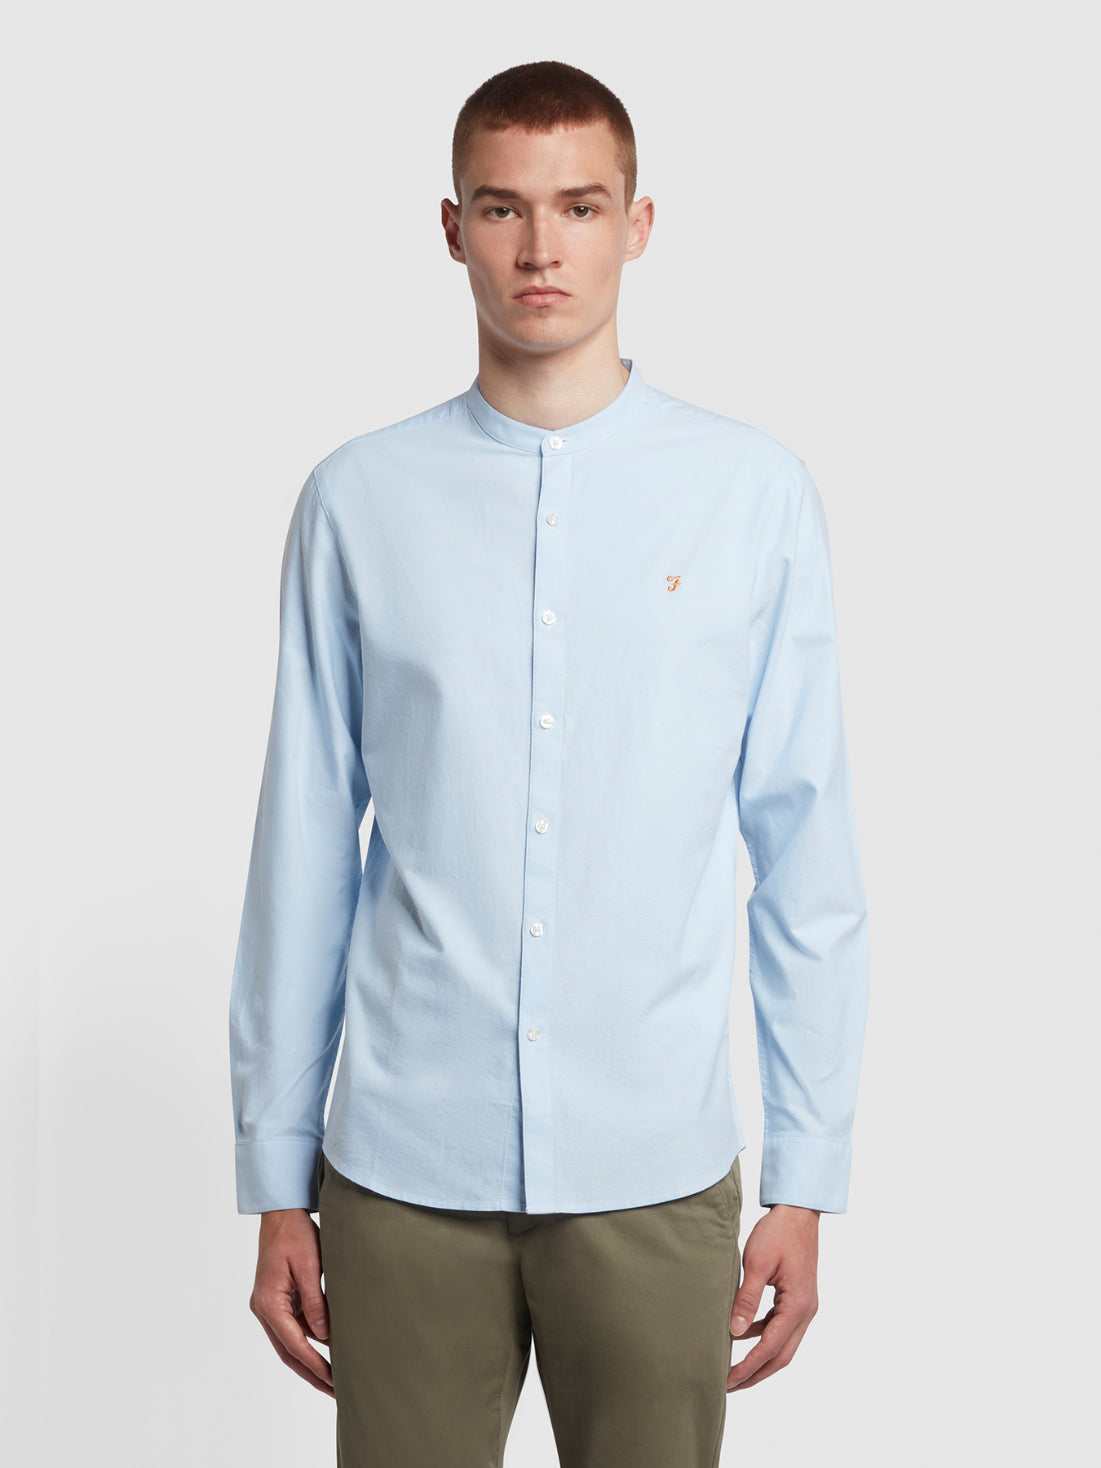 Blue Organic Oxford Slim Fit Shirt